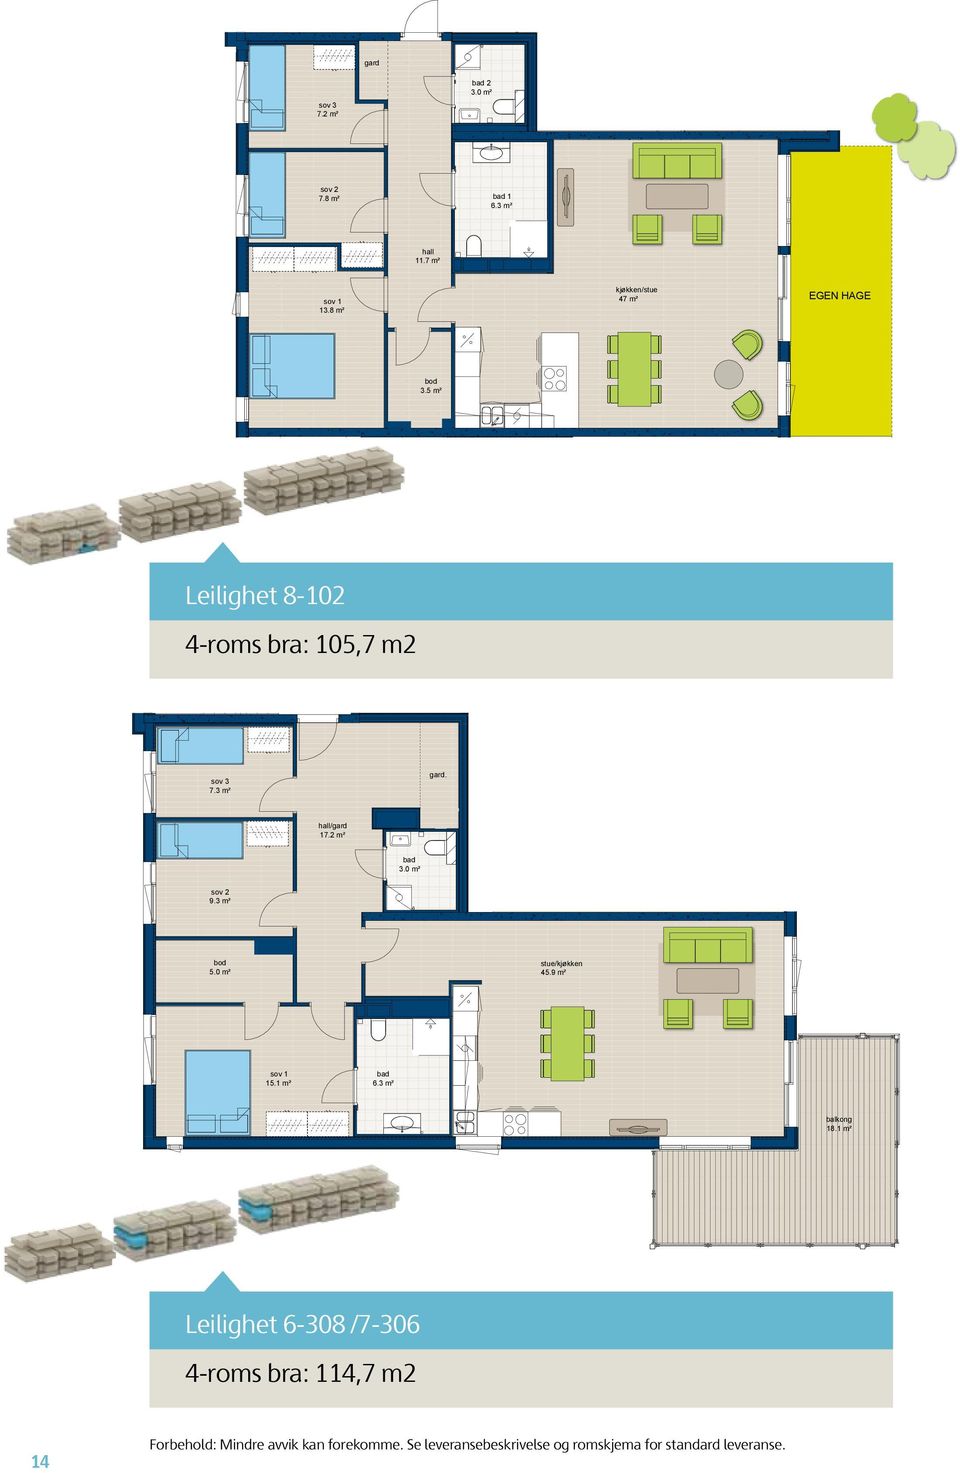 2 m² bad 9.3 m² 5.0 m² stue/kjøkken 45.9 m² 15.1 m² bad 6.3 m² balkong 18.